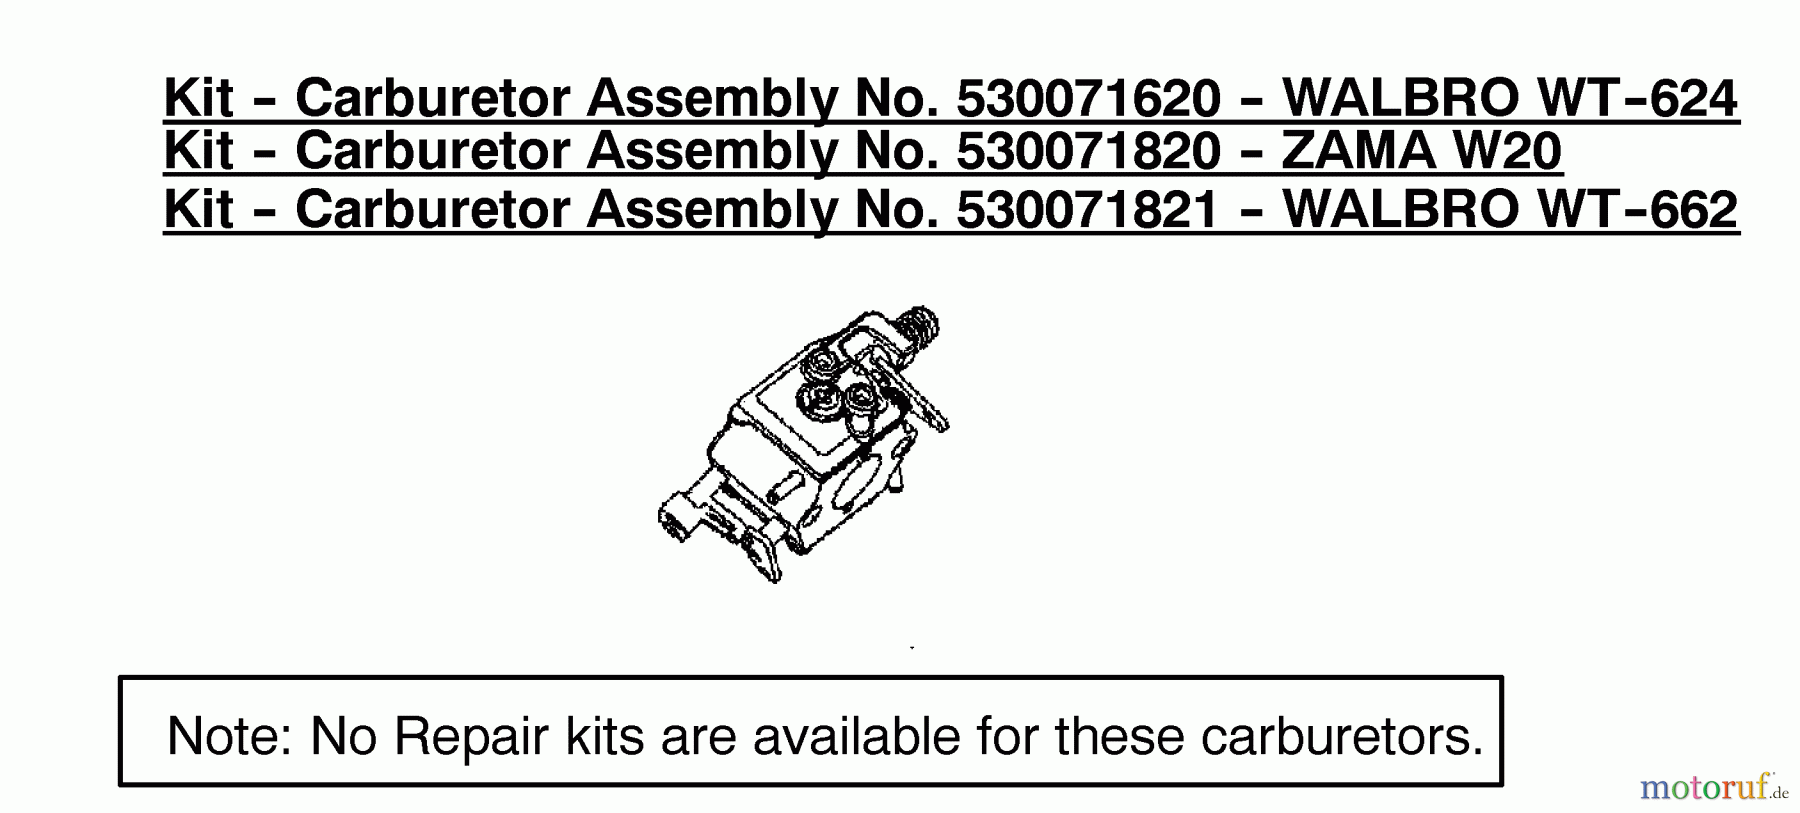  Poulan / Weed Eater Motorsägen 2055 (Type 3) - Poulan Woodsman Chainsaw Kit - Carburetor Assembly 530071820/530071821/530071620